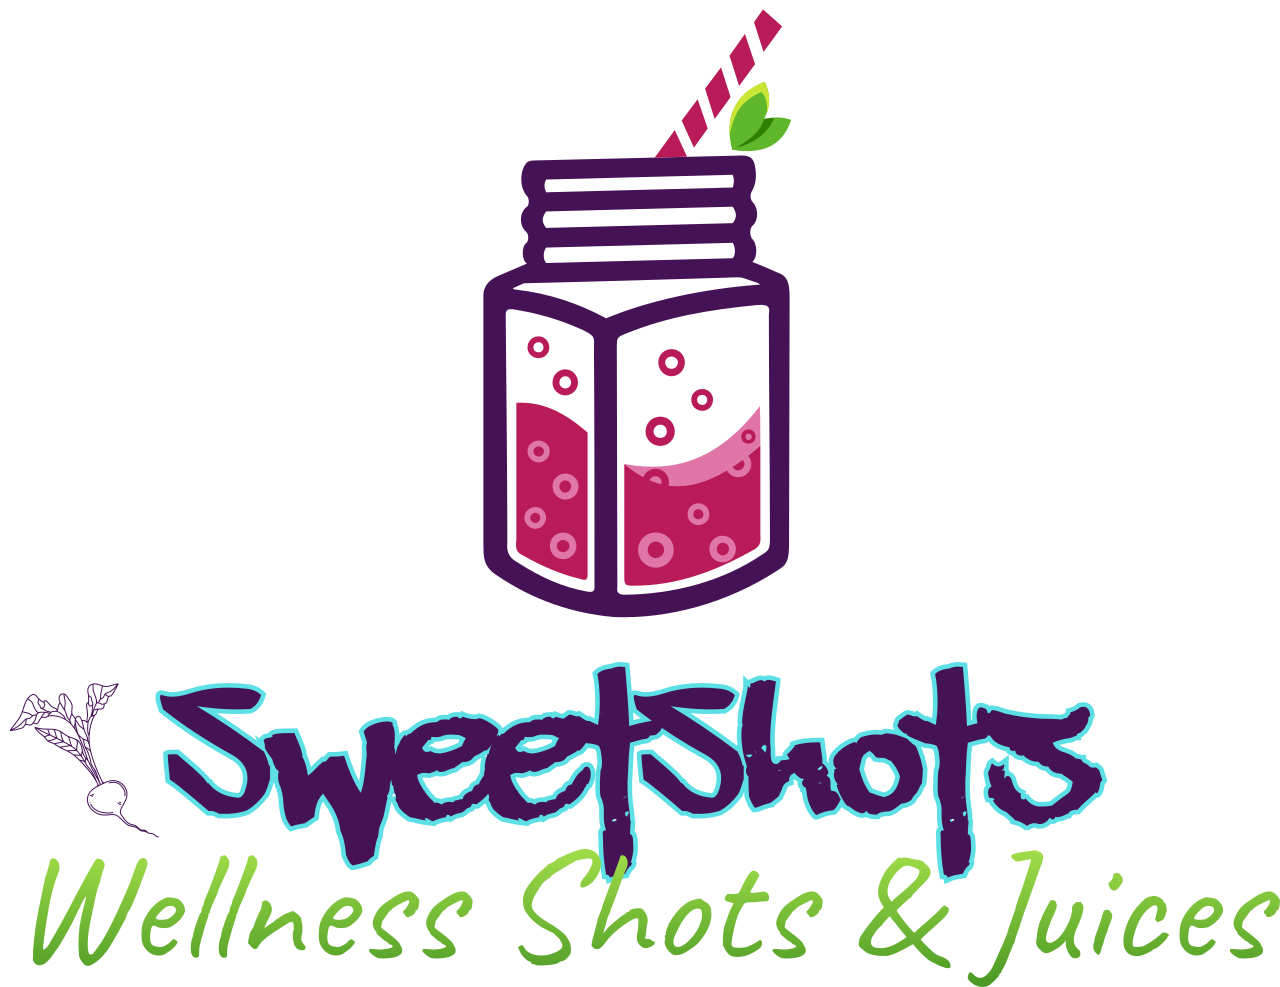 SweetShots's logo